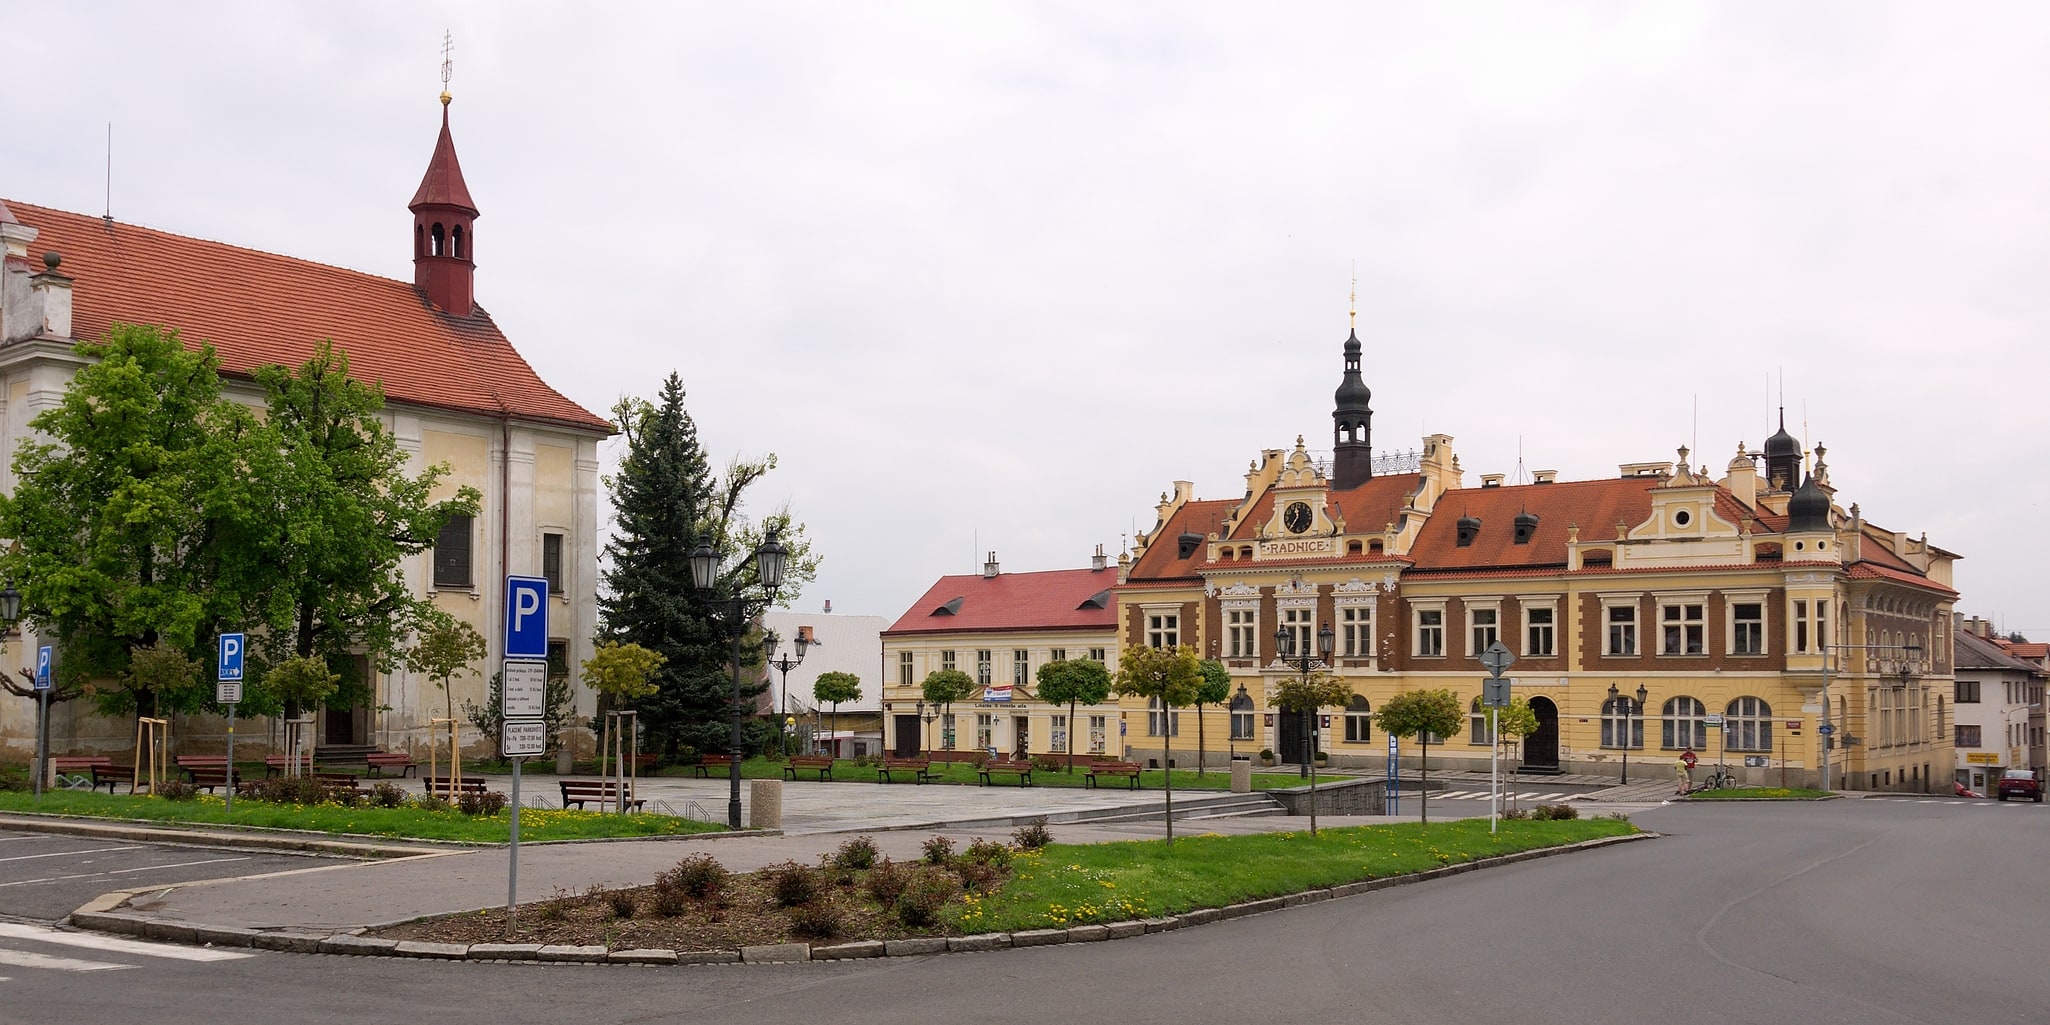 Hořovice, Czech Republic